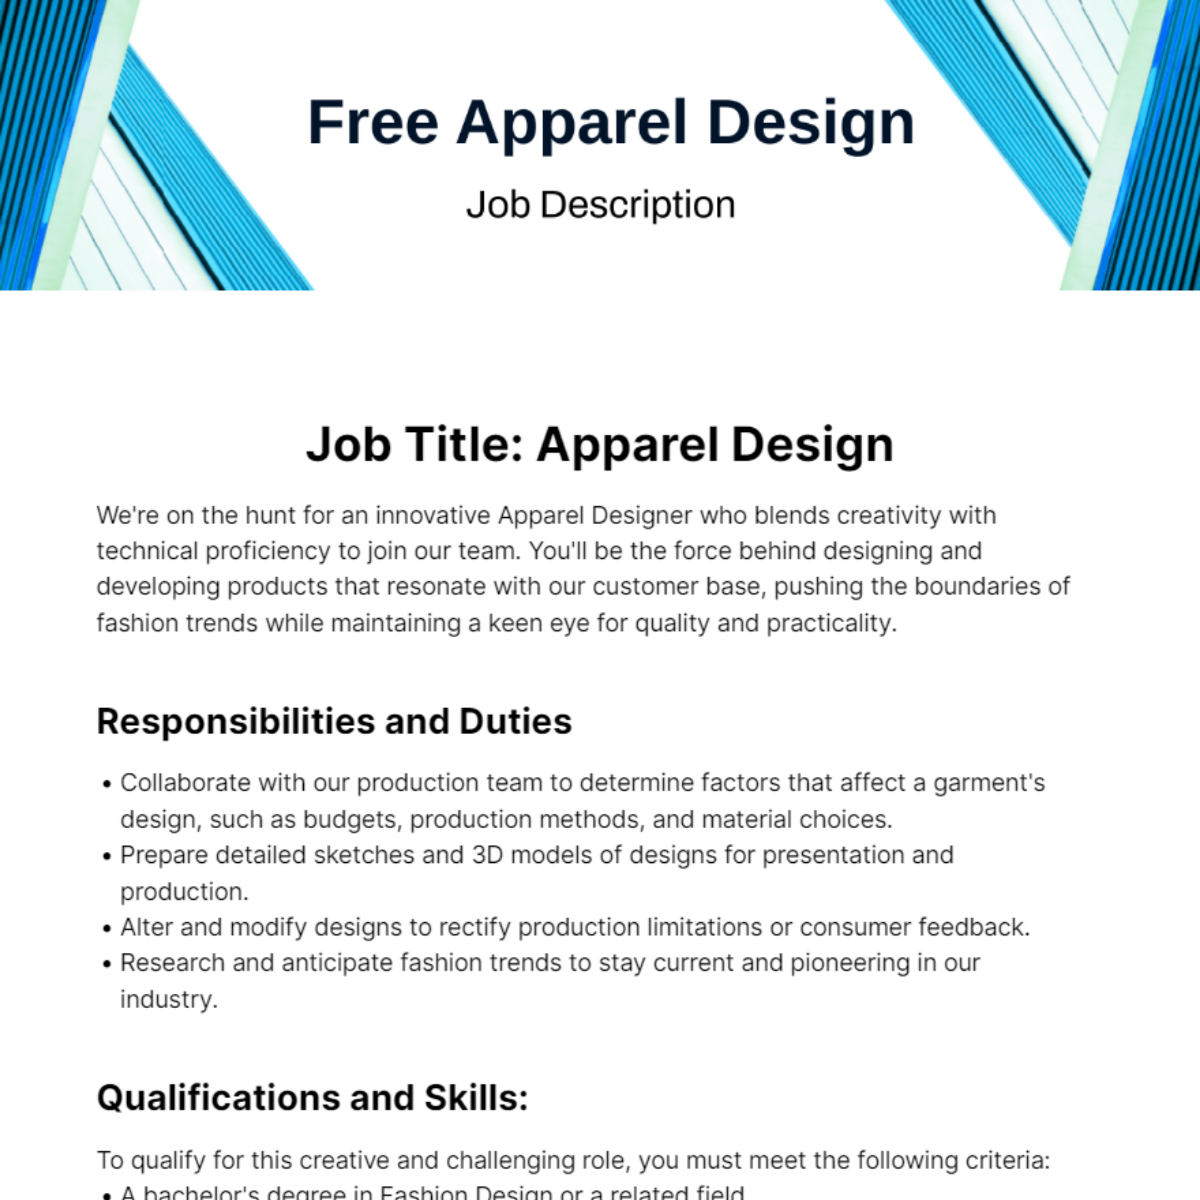 Apparel Design Job Description Template